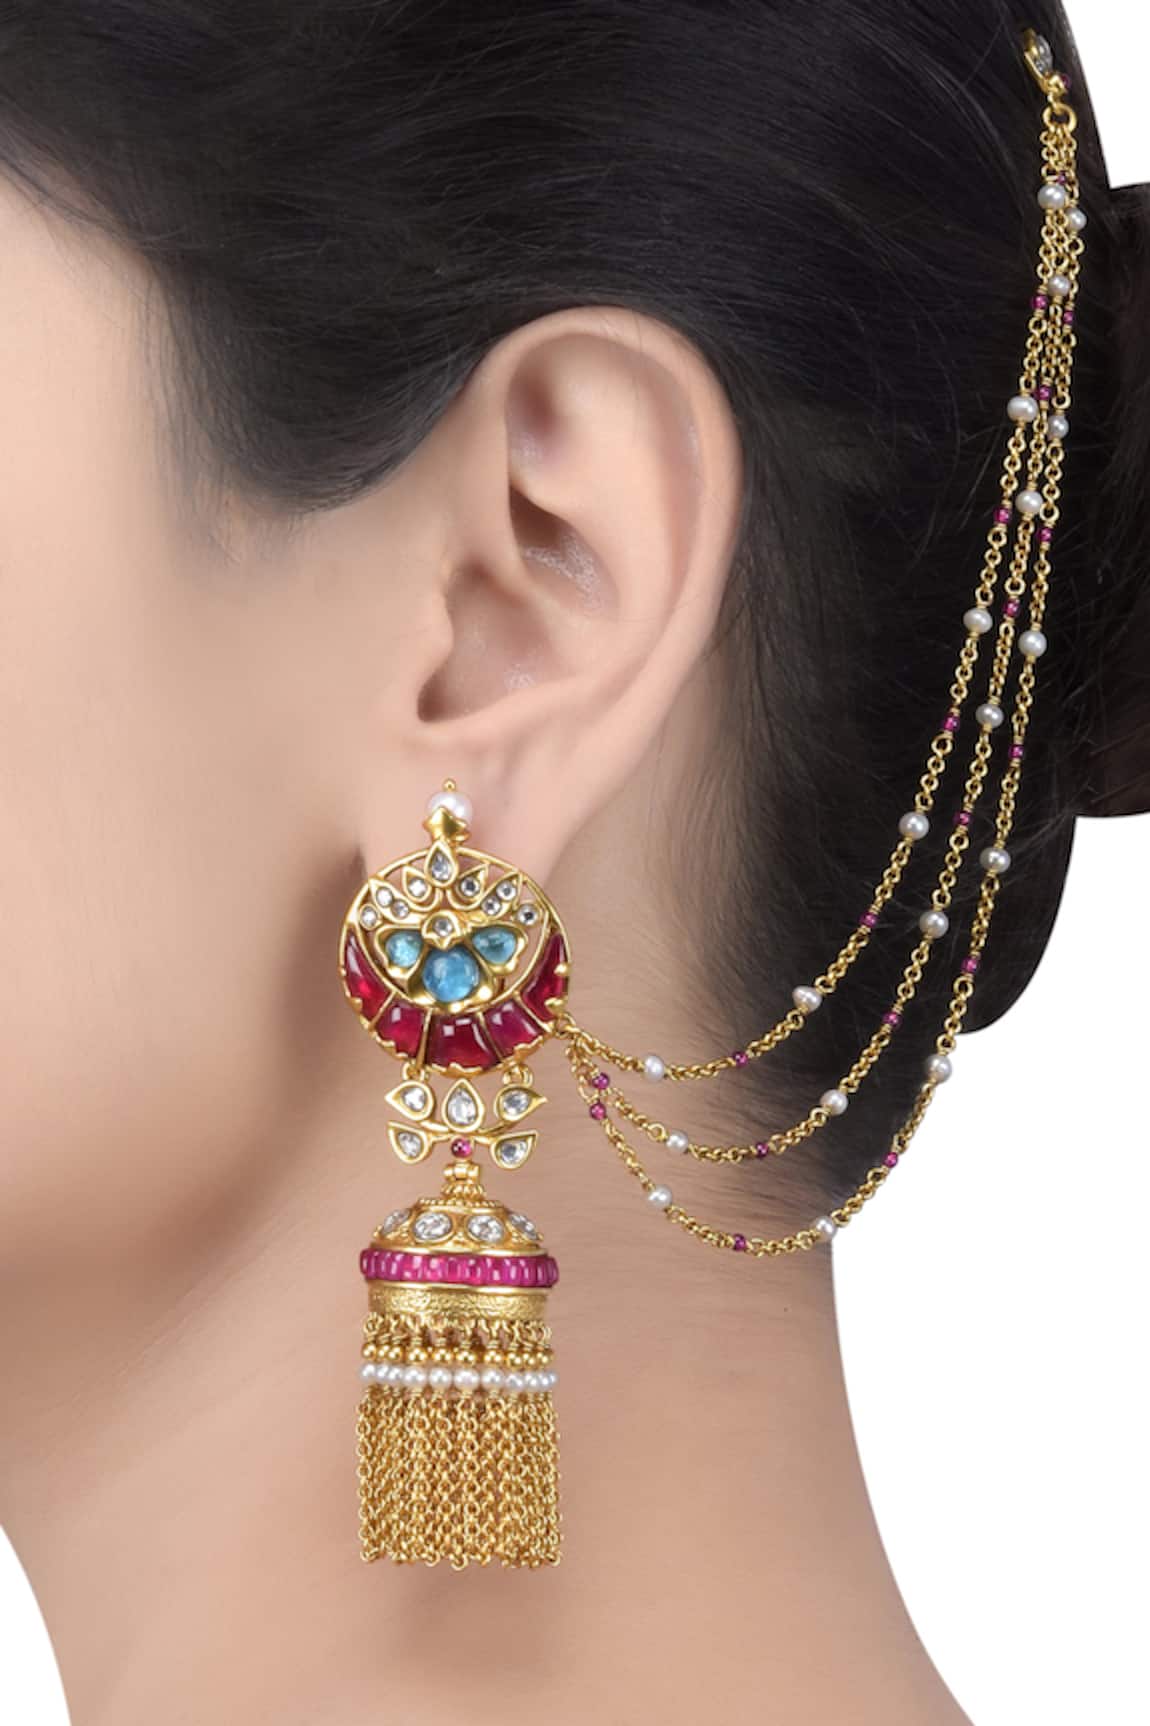 Traditional Gold Earrings Design  Buy Earrings Online